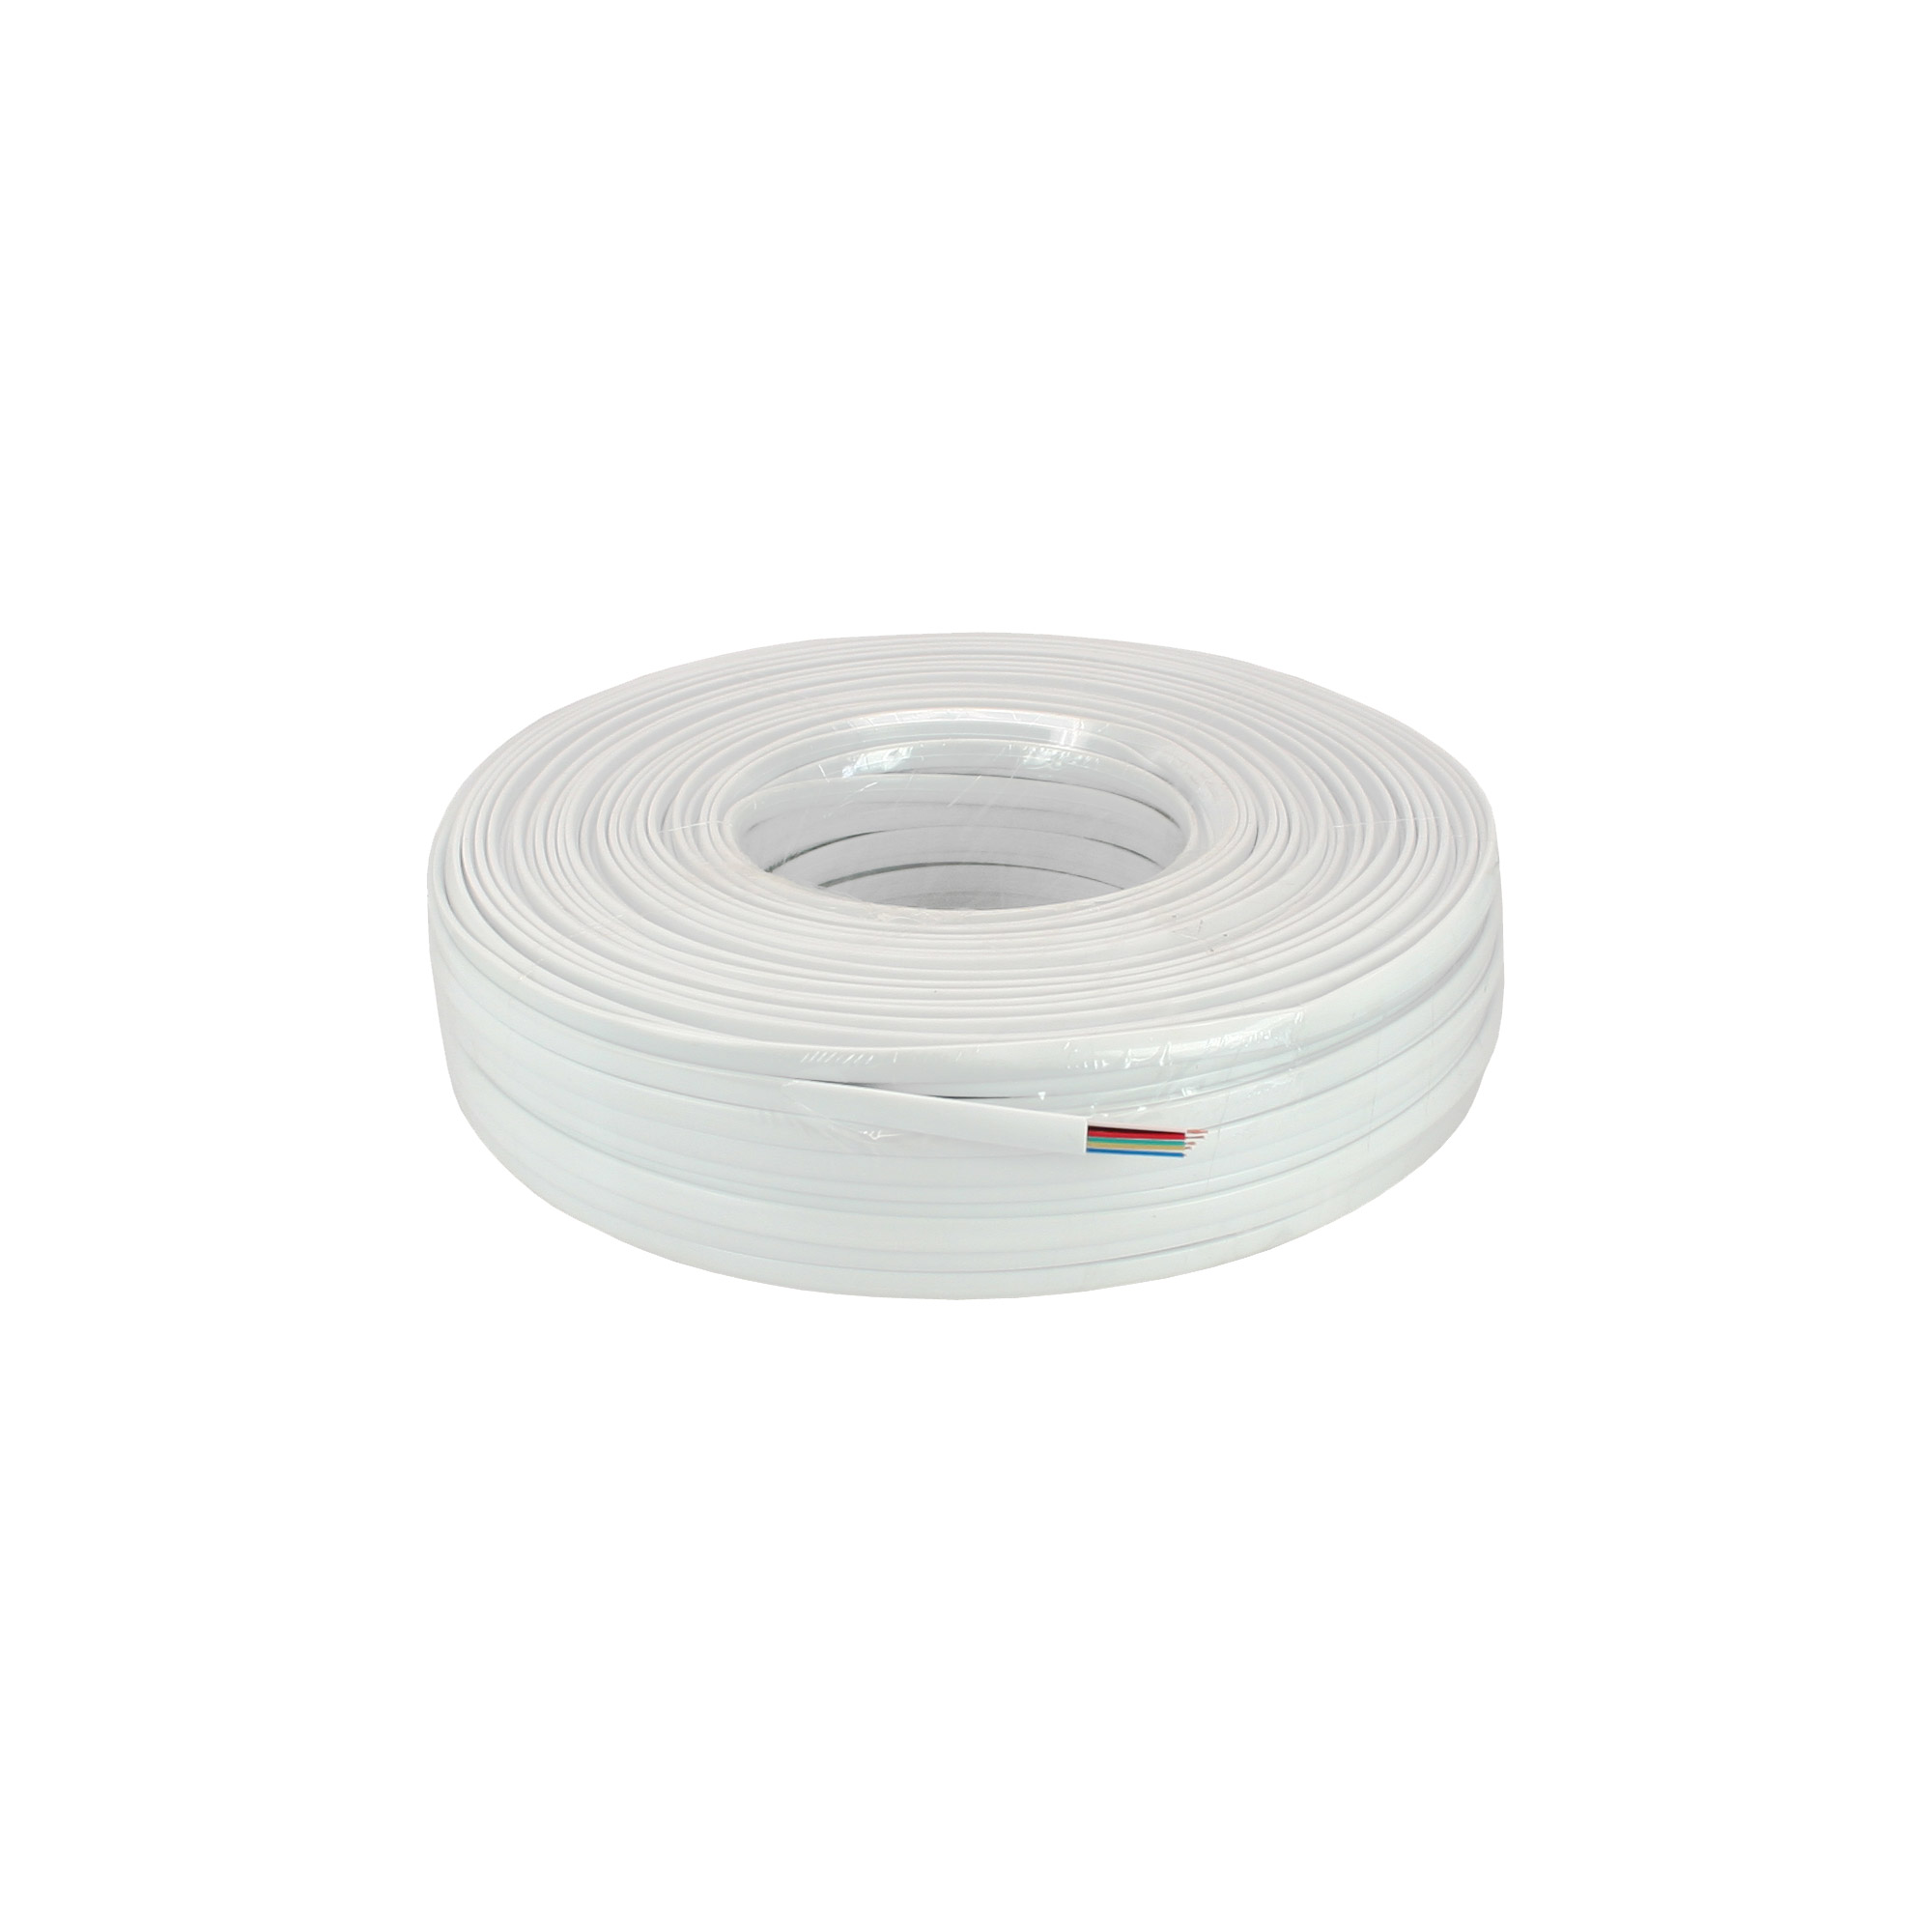 INLINE InLine® Modularkabel, 6adrig Flachband weiß, 100m Kabel Rohware/Meterware, Kabel Ring Telefon, m 100